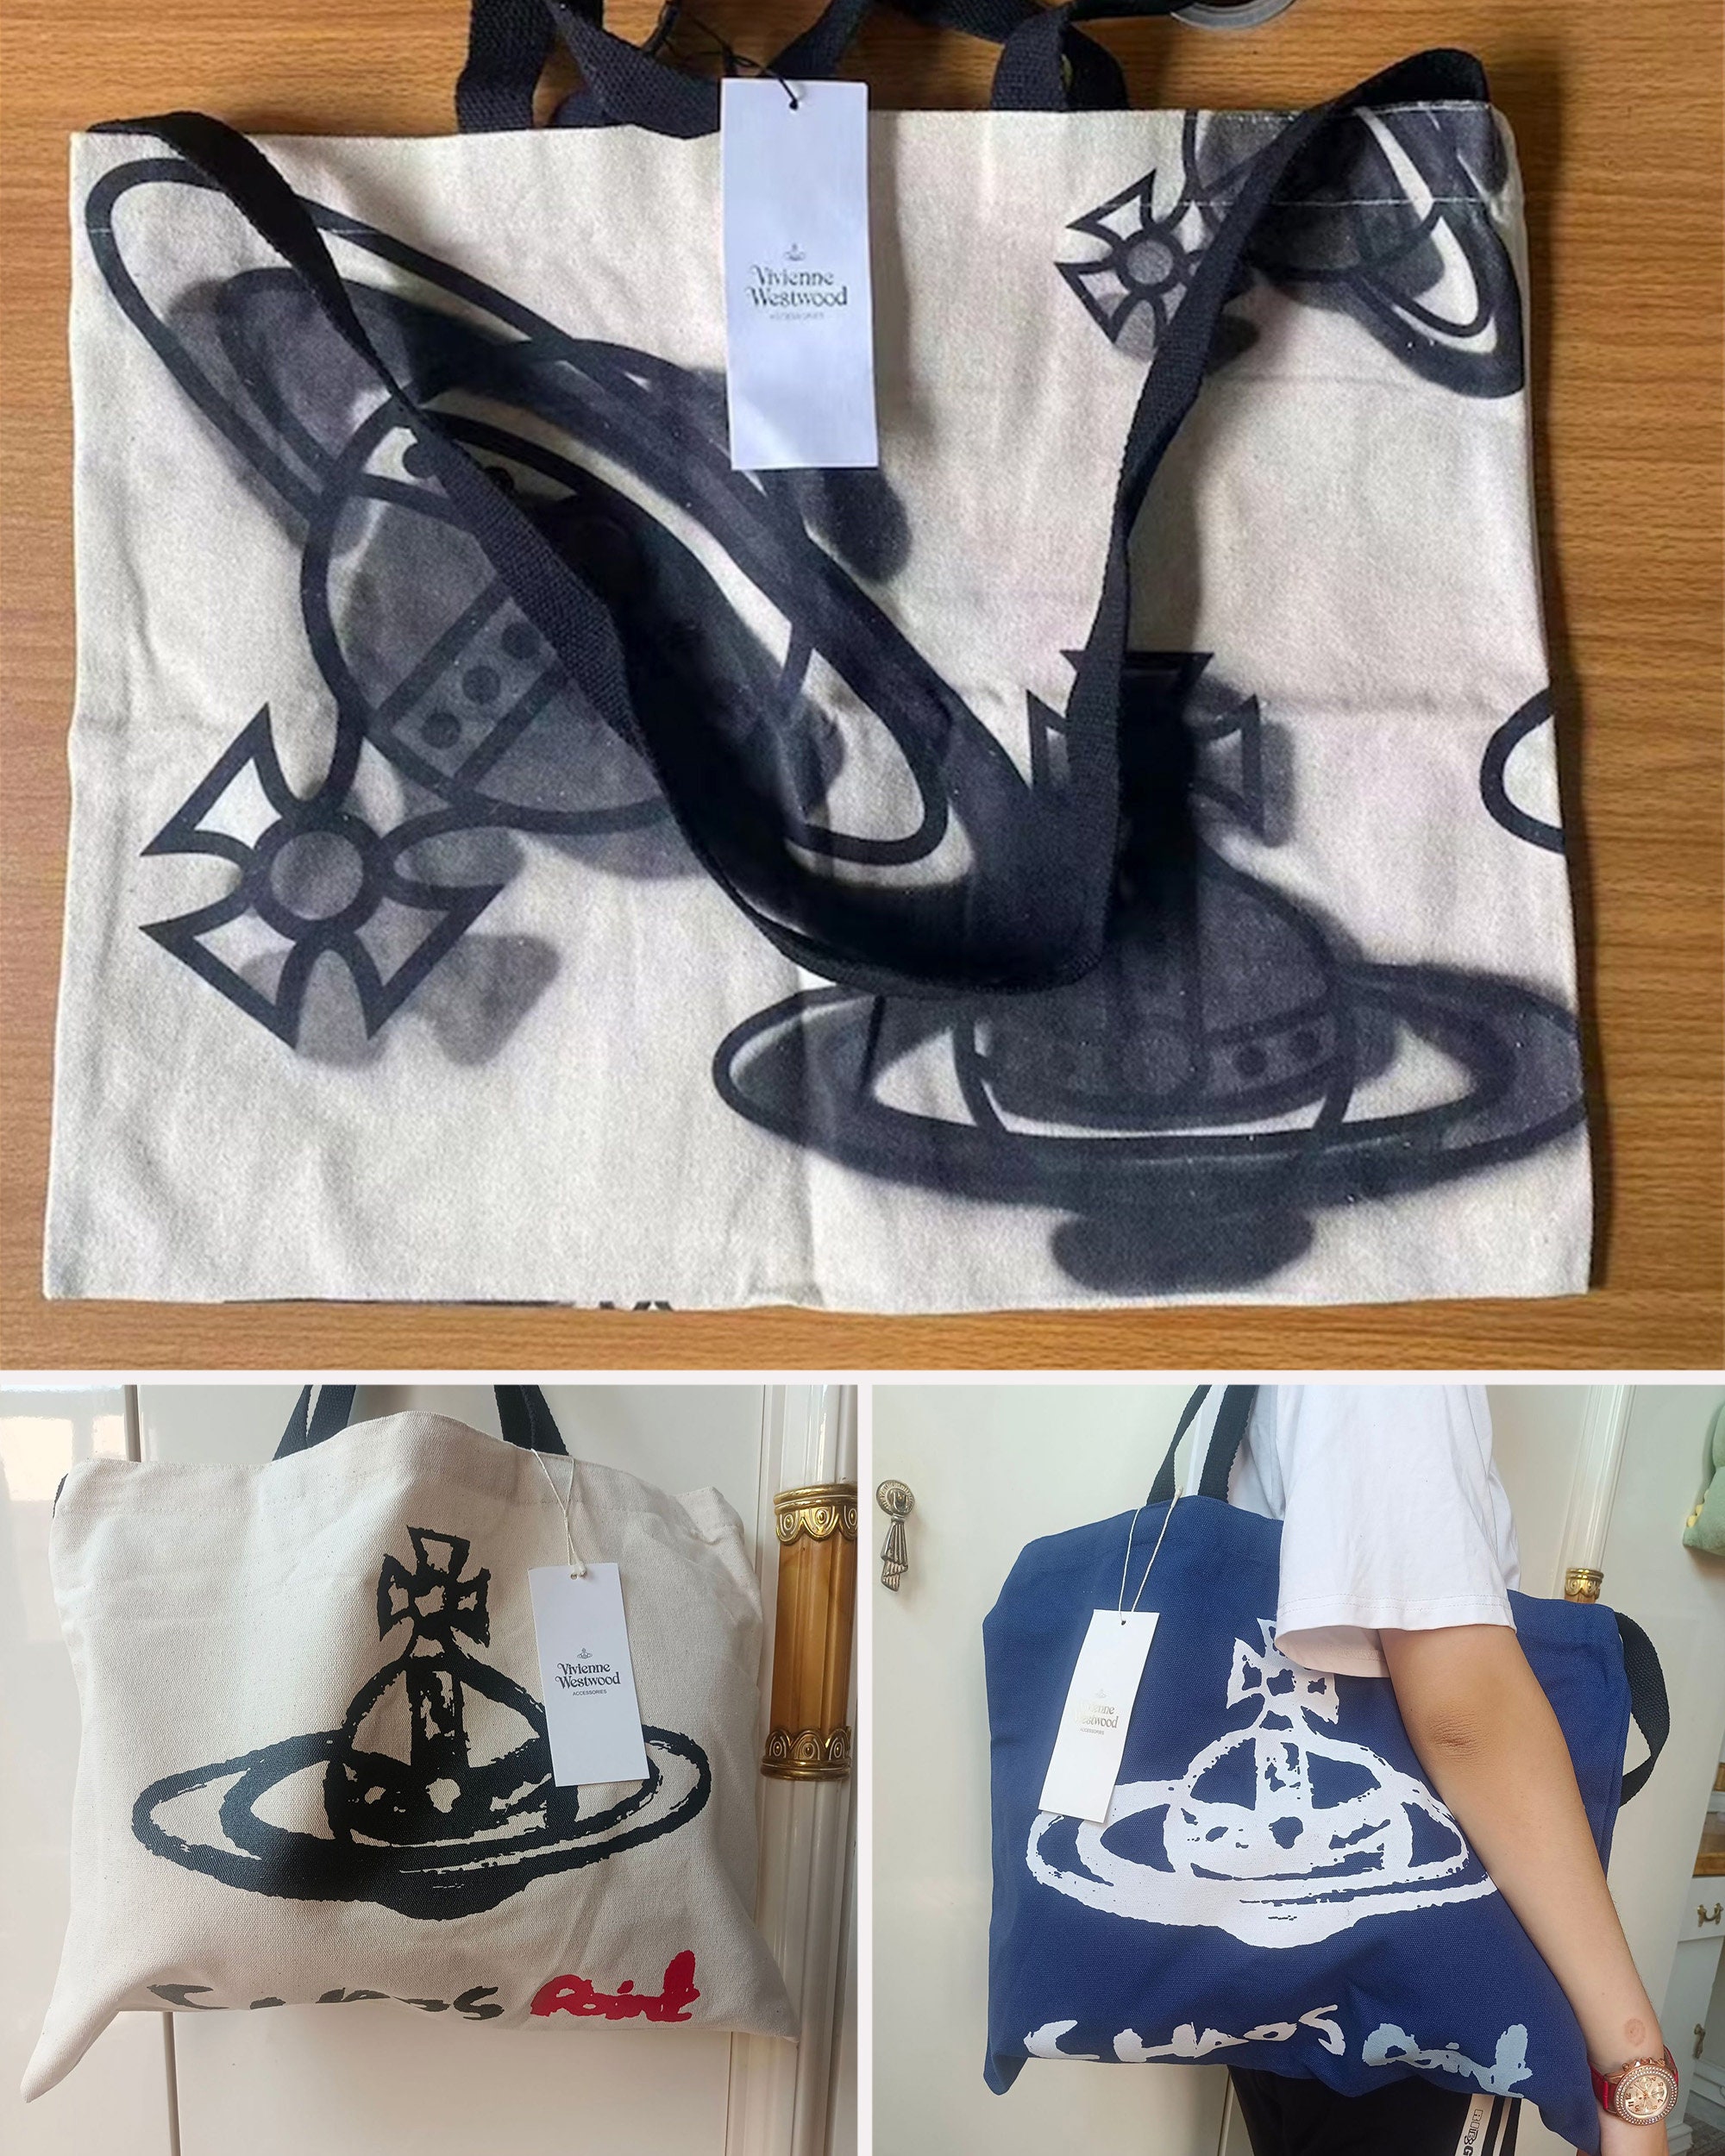 Women's Bags, Vivienne Westwood 'Carrie' bucket bag, Levi's logo canvas  tote bag in ecru